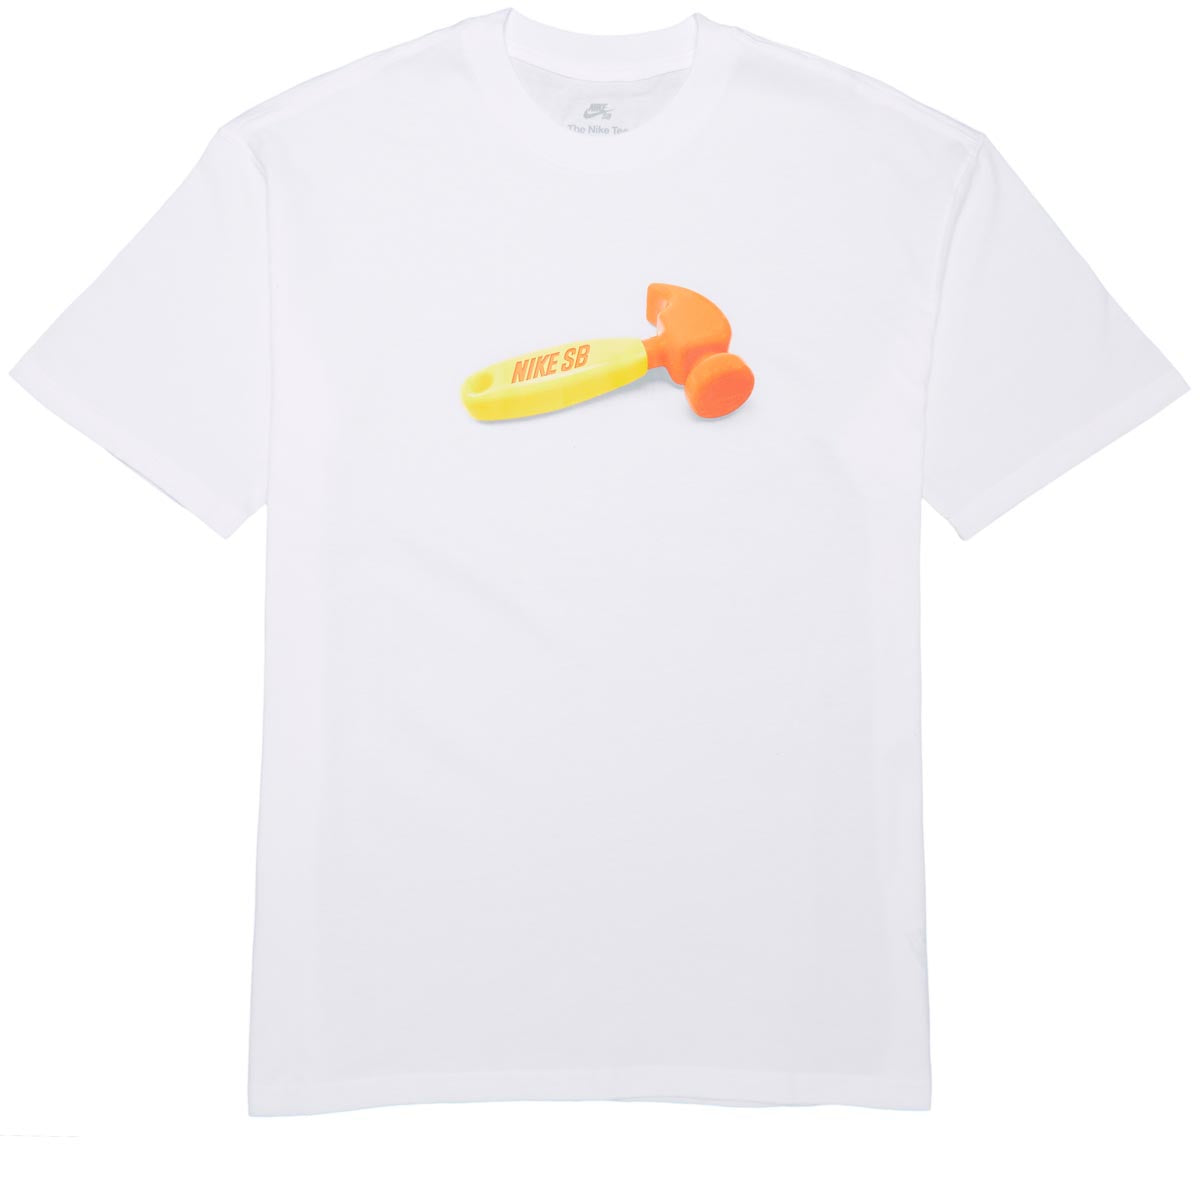 Nike SB Hammer T-Shirt - White image 1